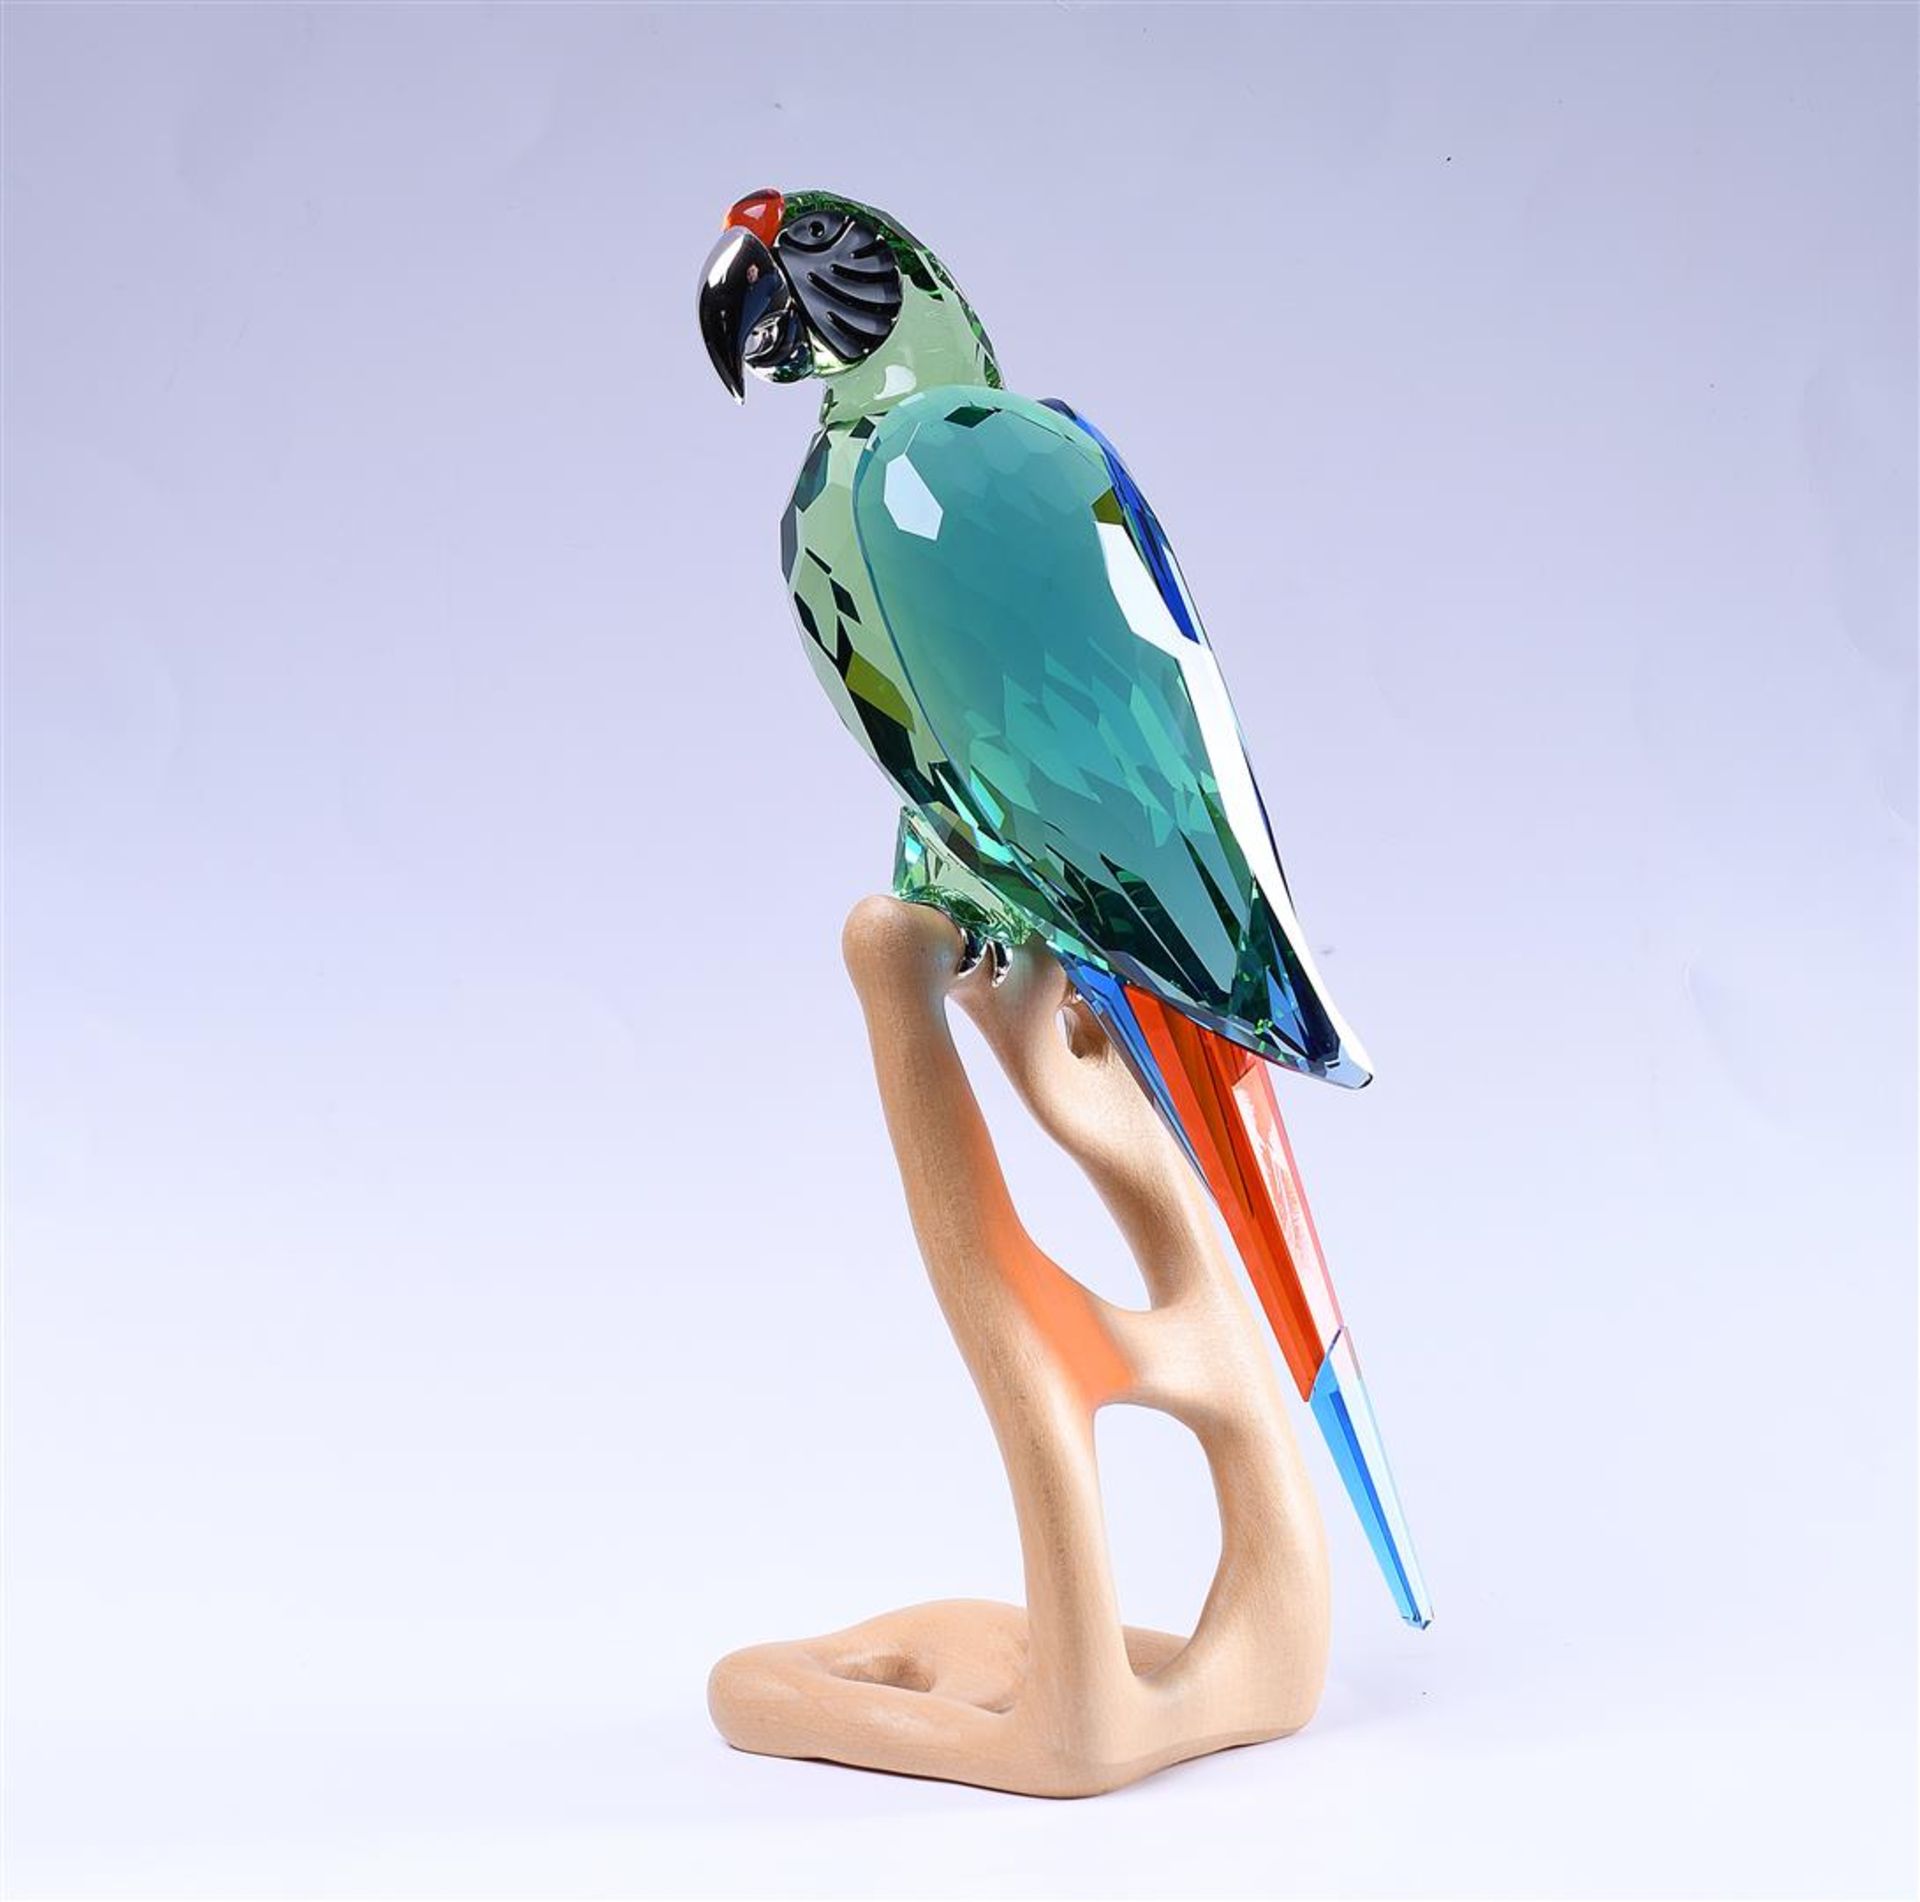 Swarovski, Macaw paradise bird, Year of issue 2005, 685824. Includes original box.
H. 24 cm. - Image 5 of 7